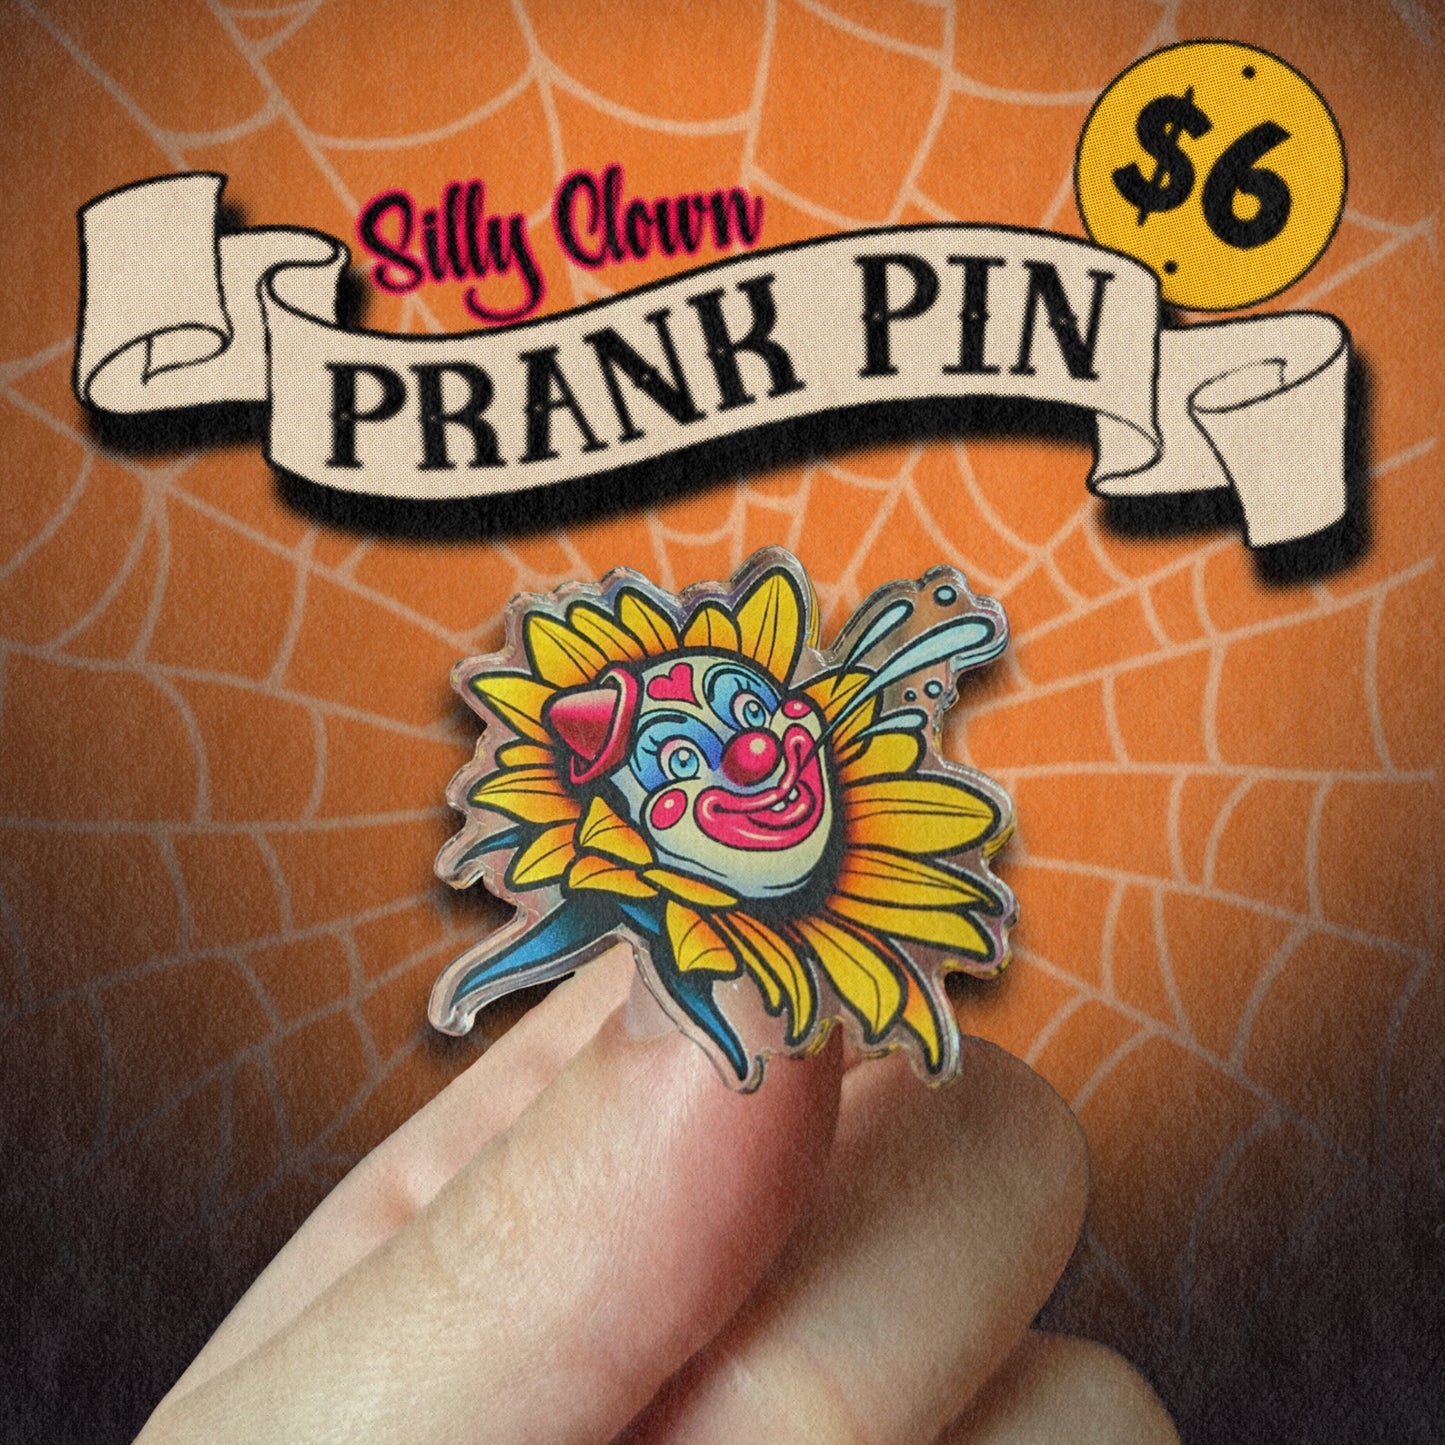 Silly Clown Prank Pin